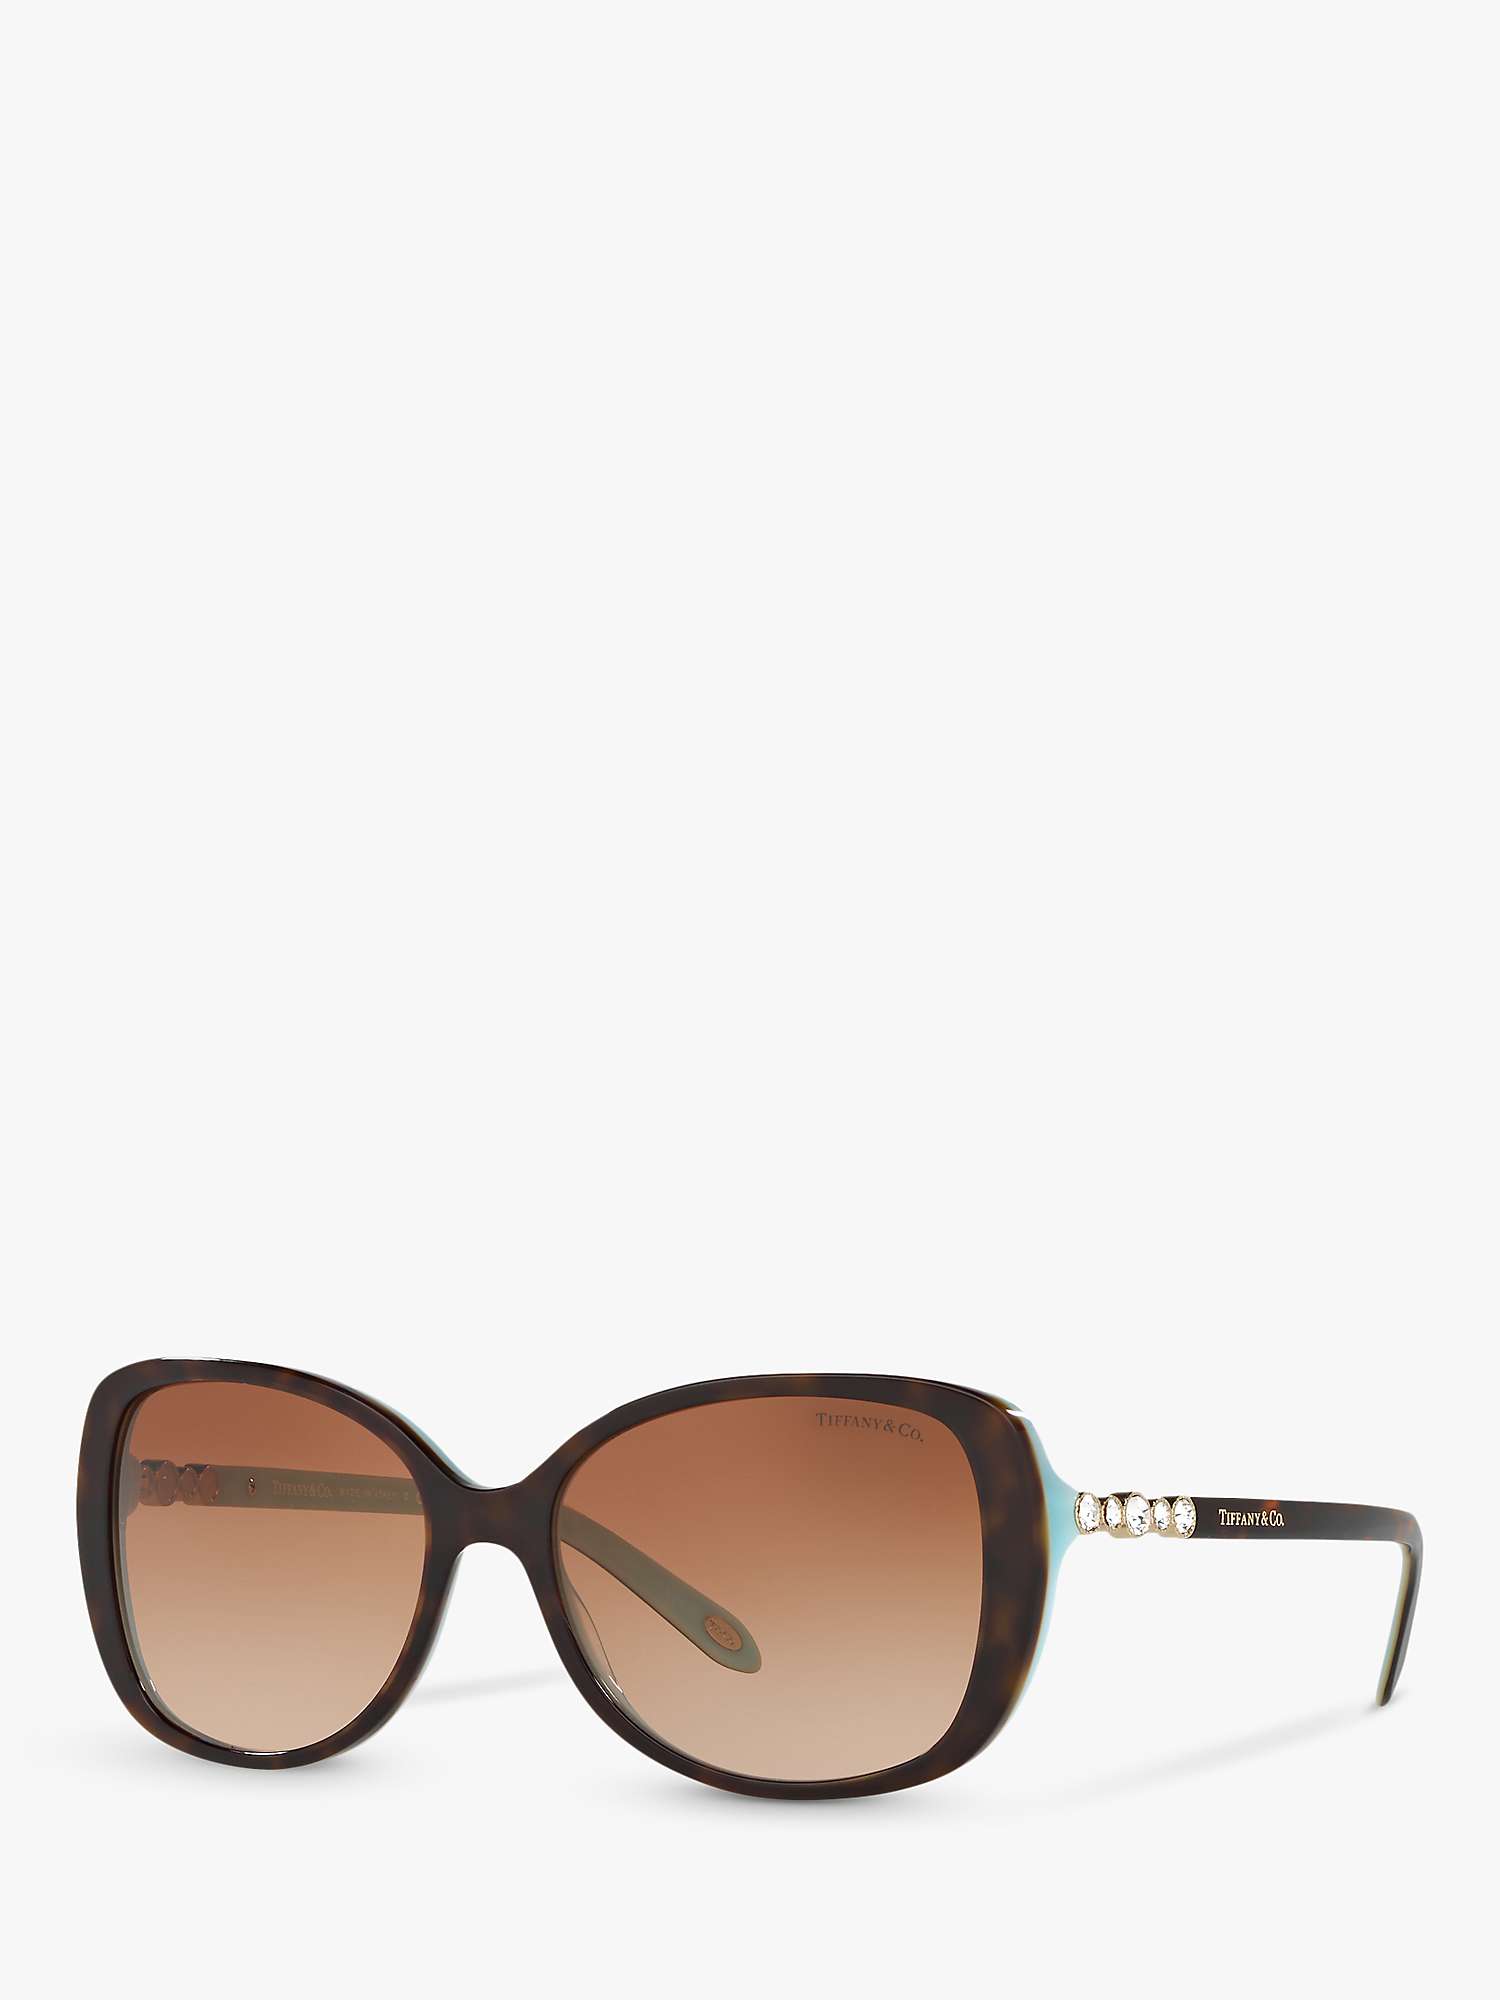 Buy Tiffany & Co TF4121B Women's Rectangular Sunglasses Online at johnlewis.com